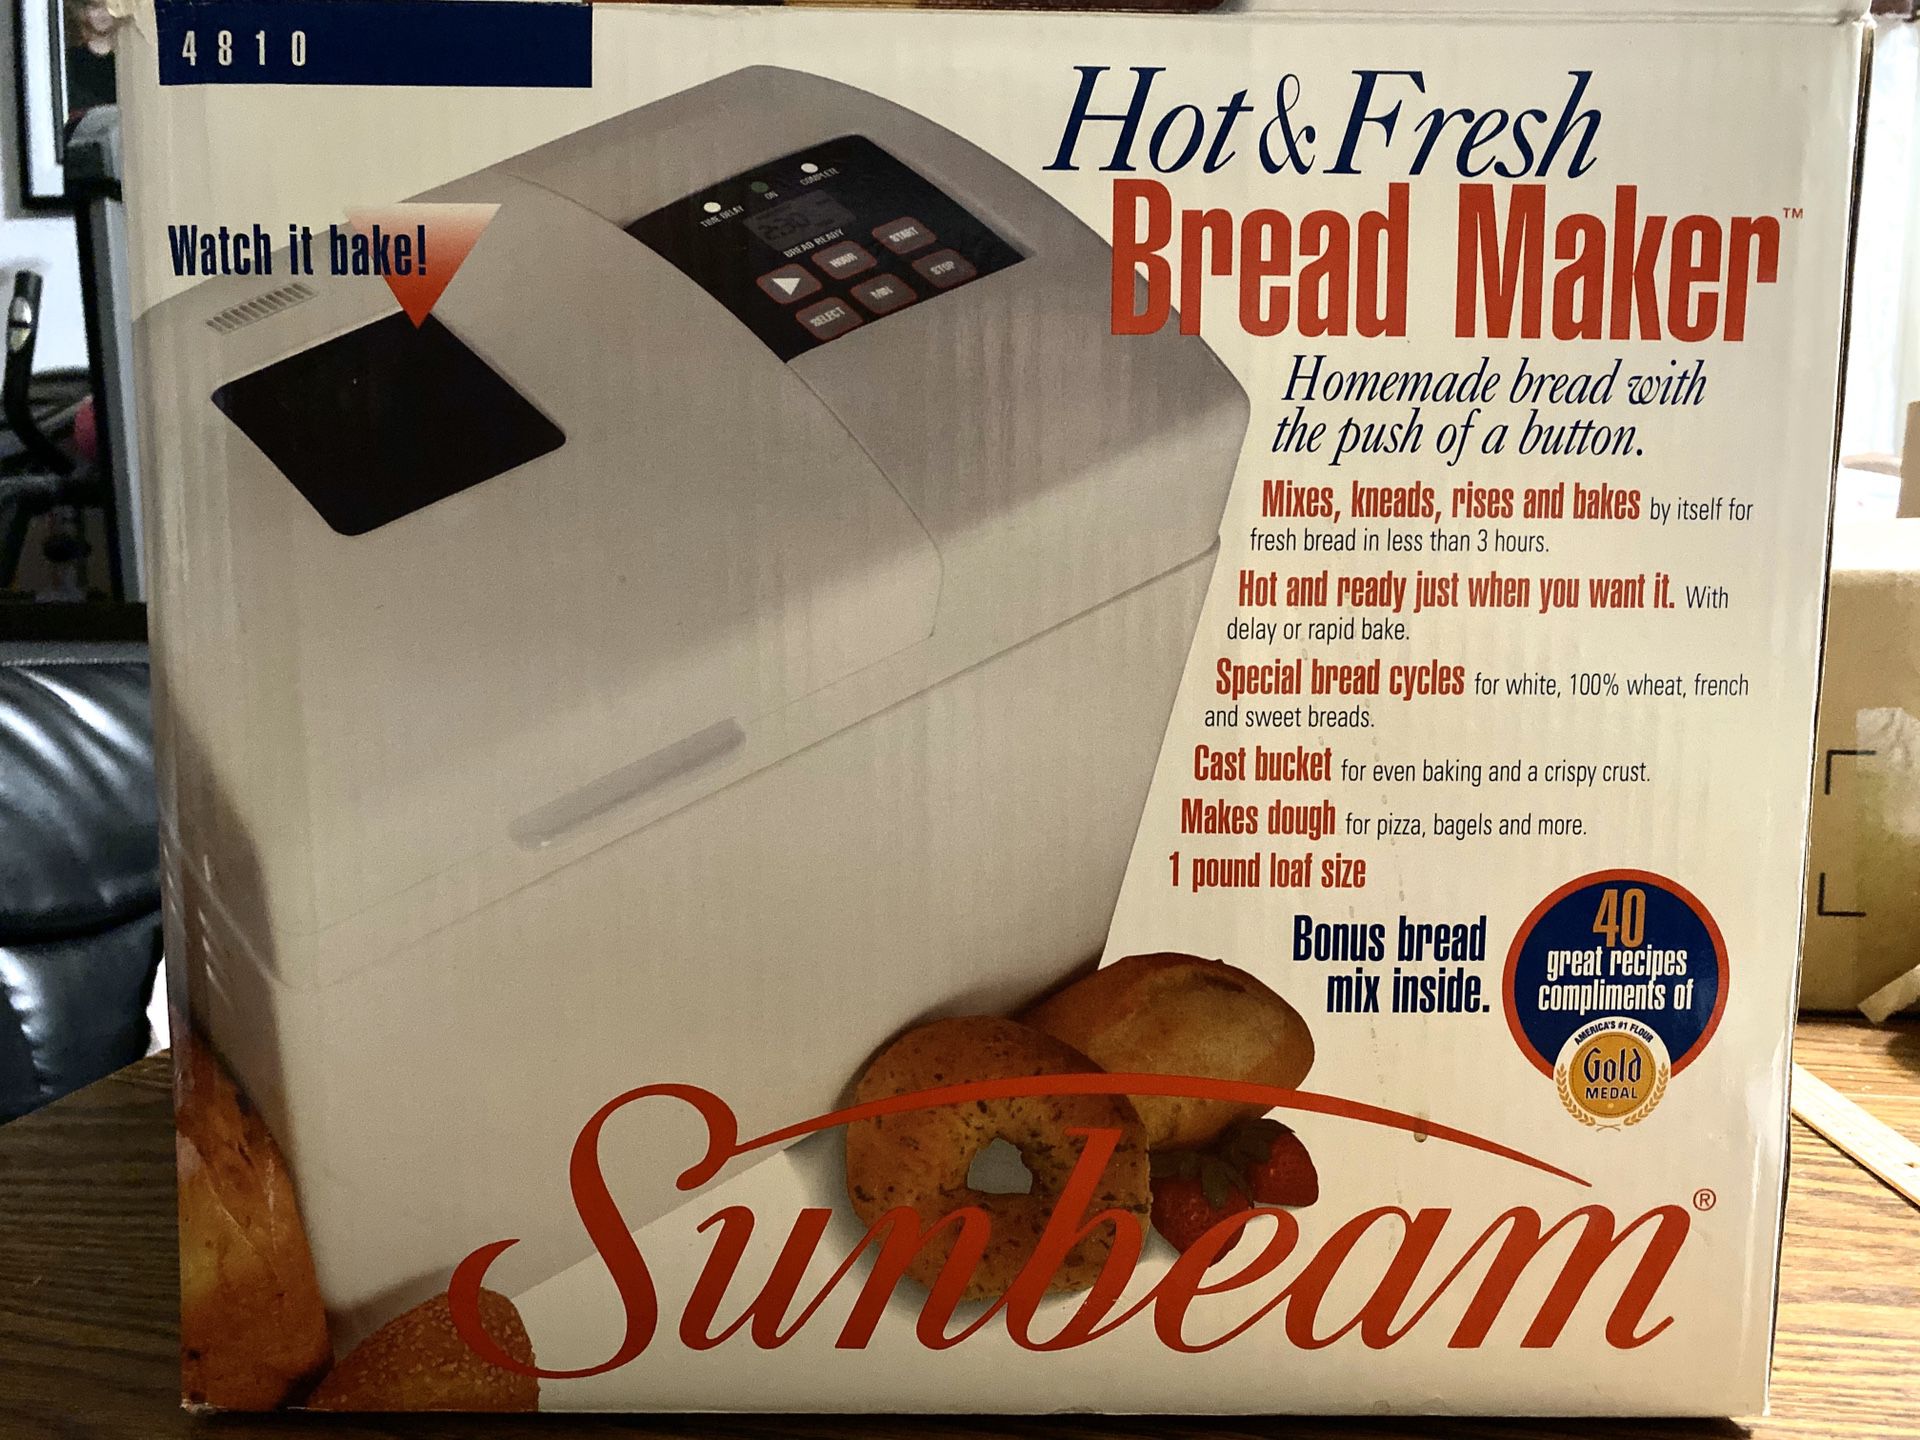 Sunbeam bread maker- 1 pound loaves